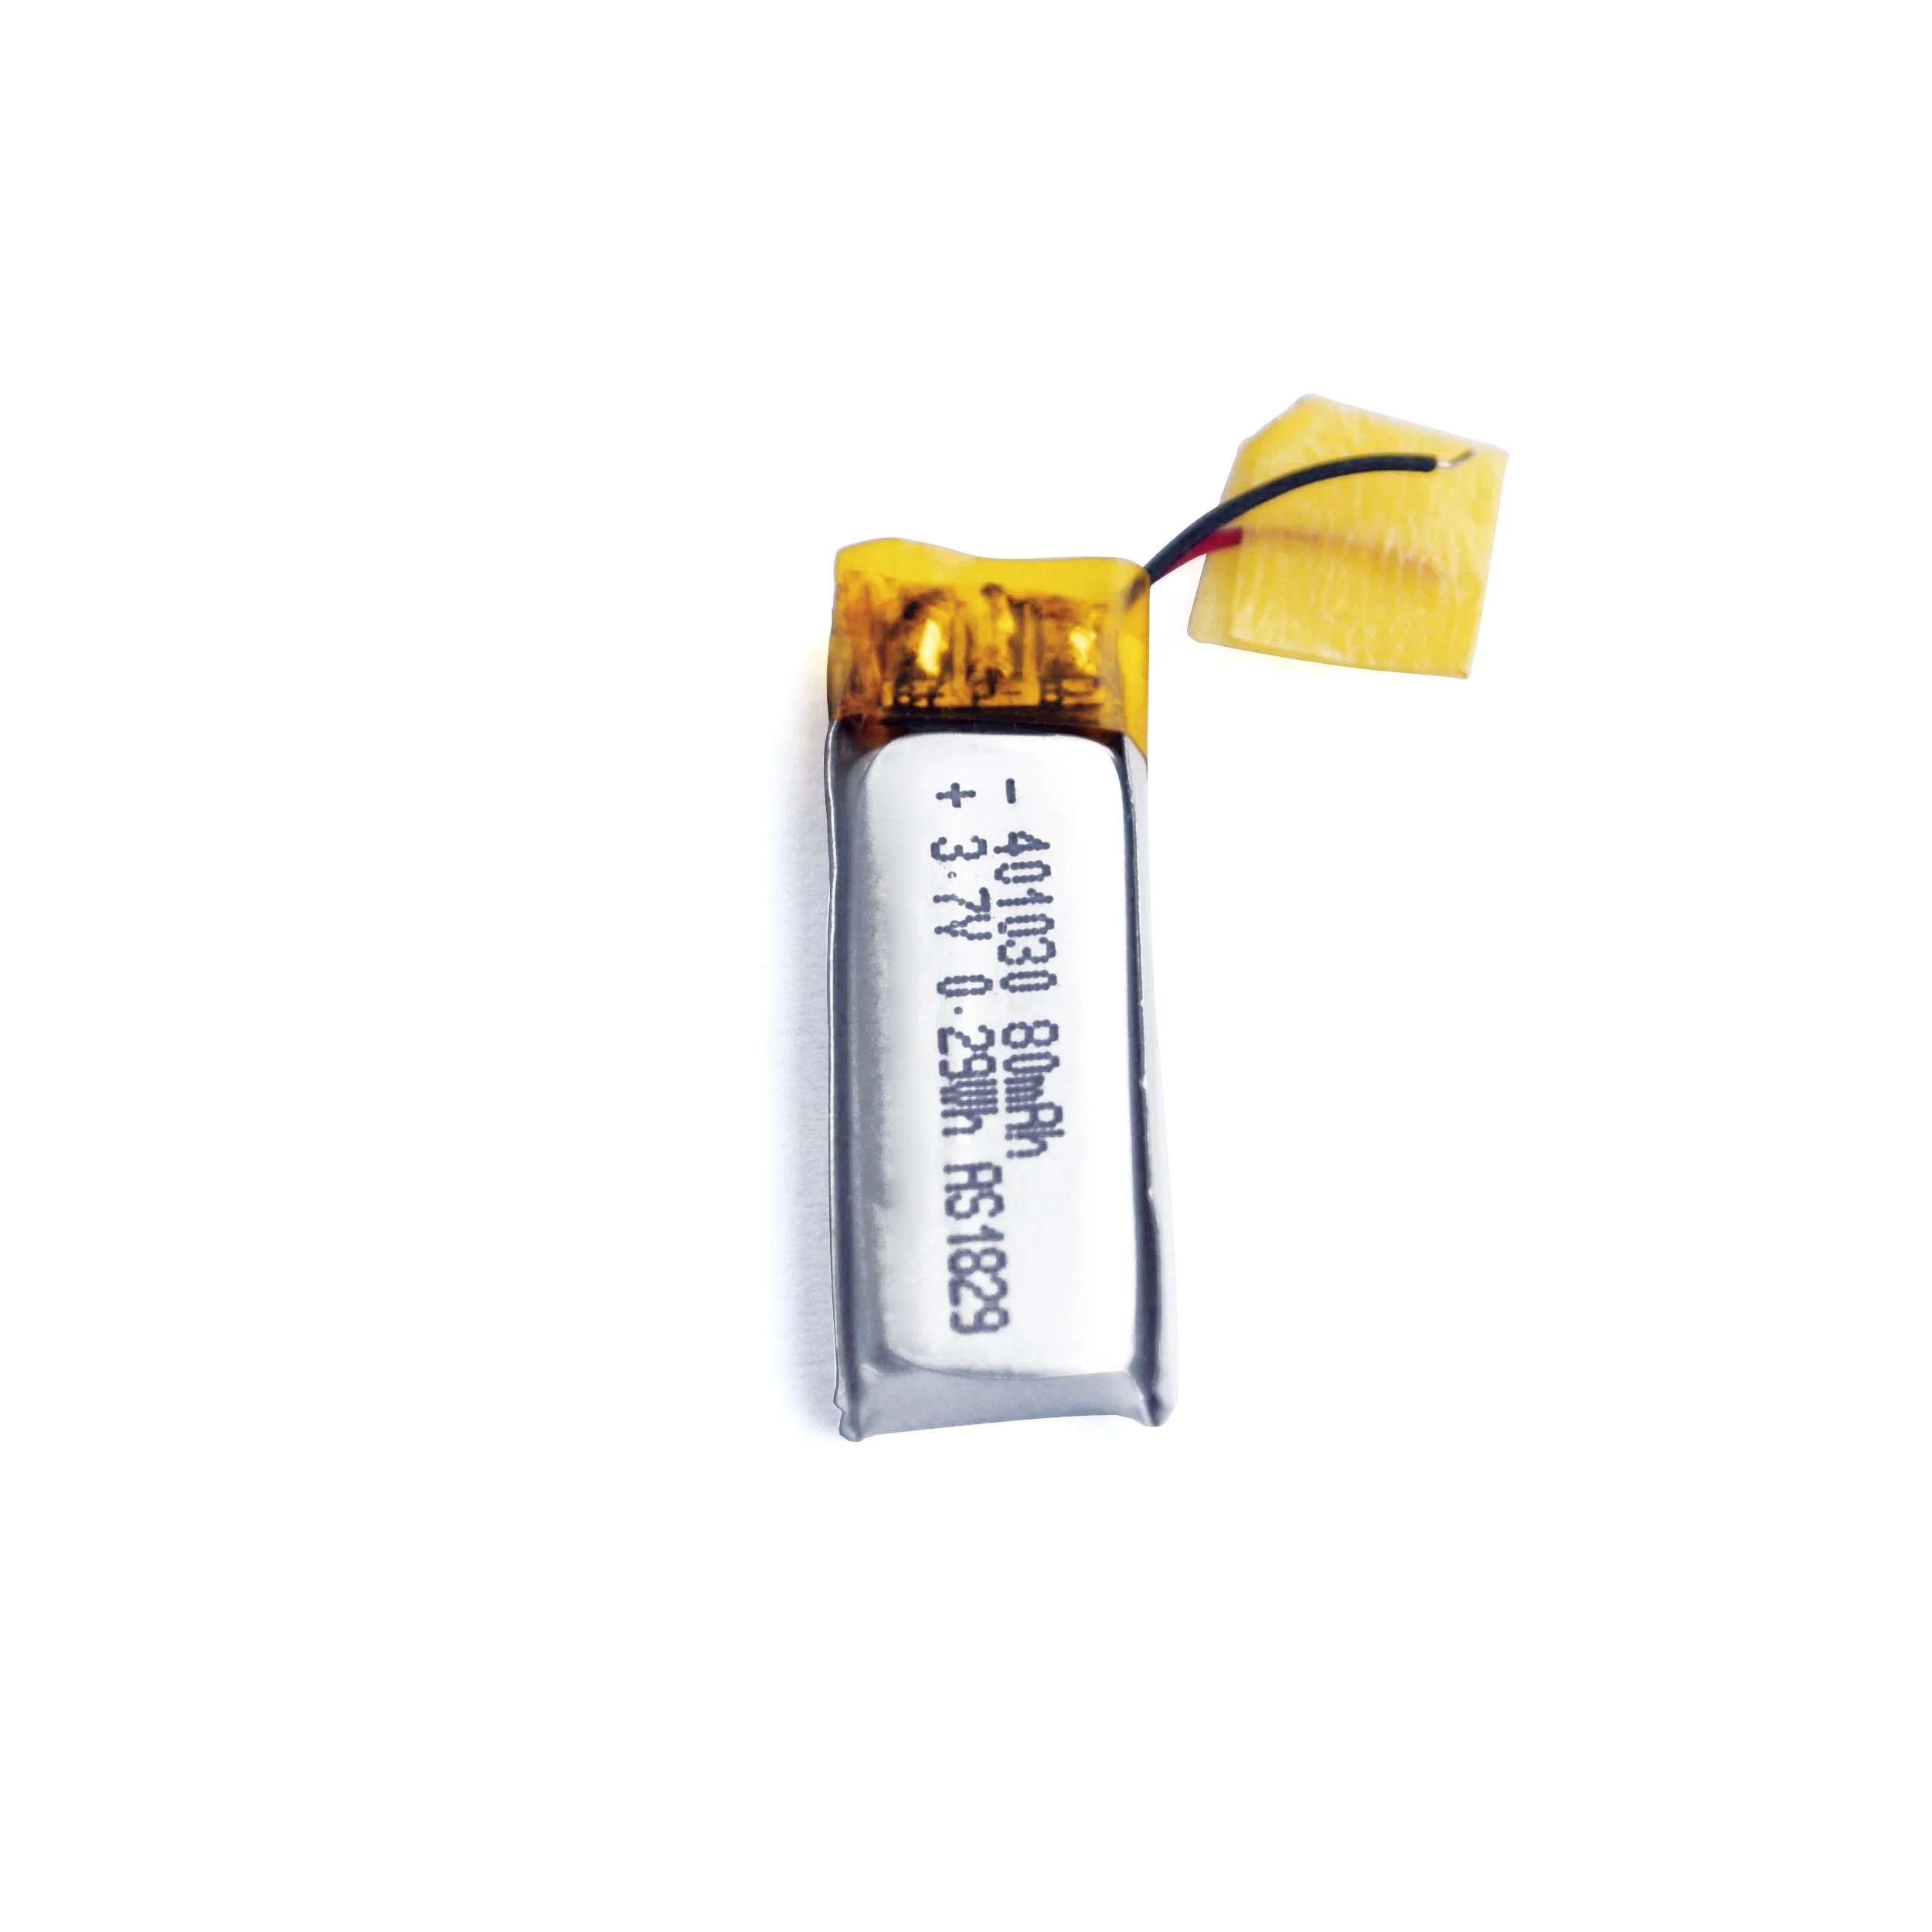 UL/CE/ONU Certificado38.3 Pequeña Lipo Batería recargable de 3,7V 401030 80mAh batería de polímero de litio para Smart Watch